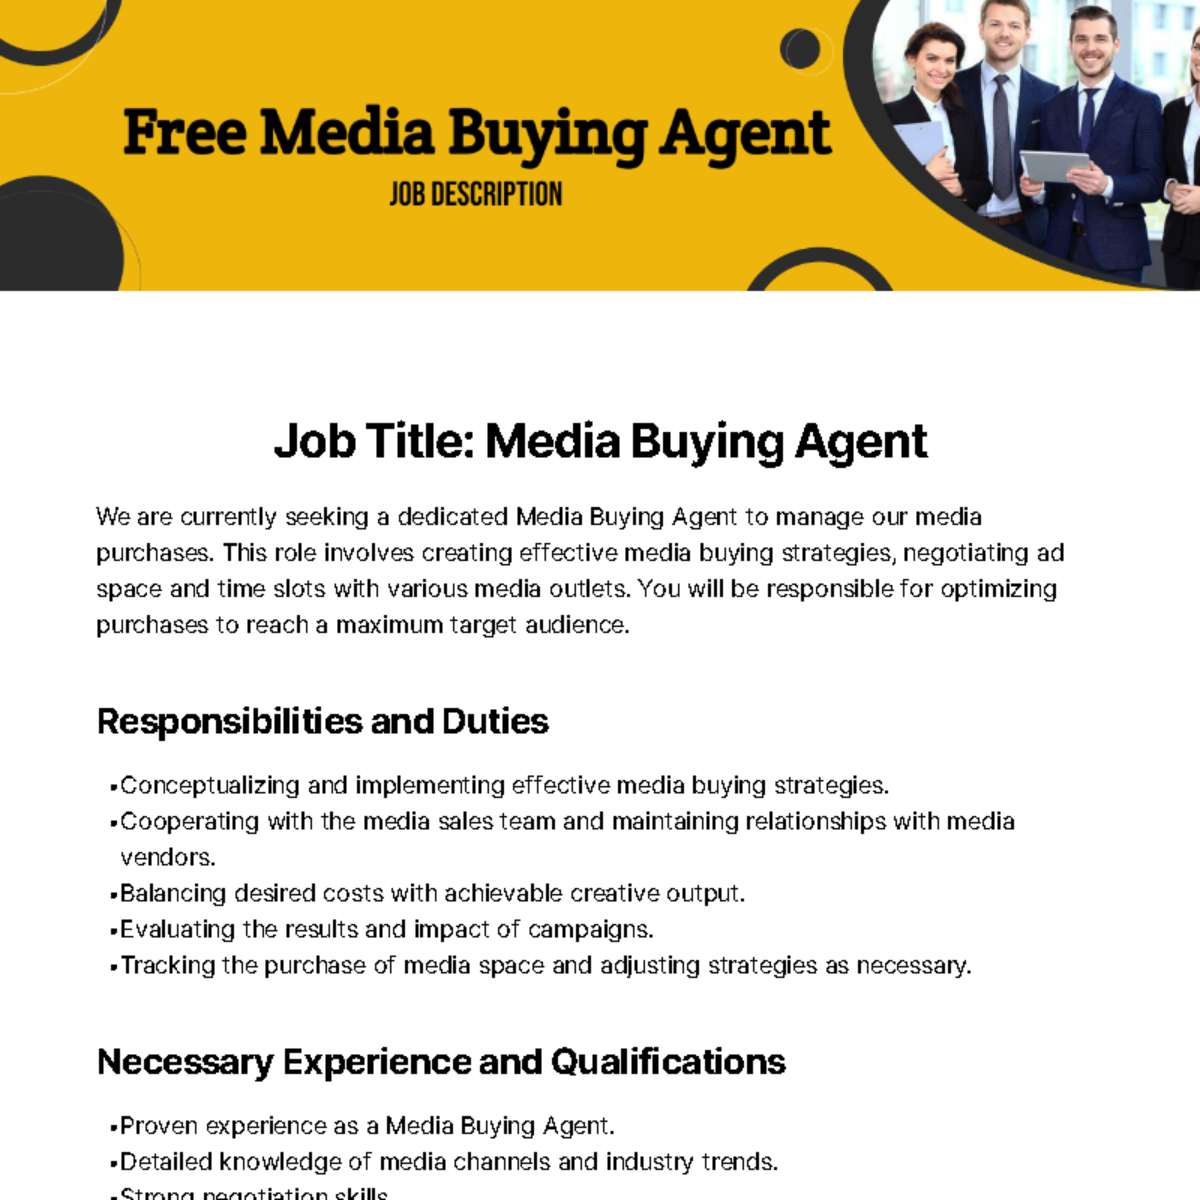 Free Media Buying Agent Job Description Template